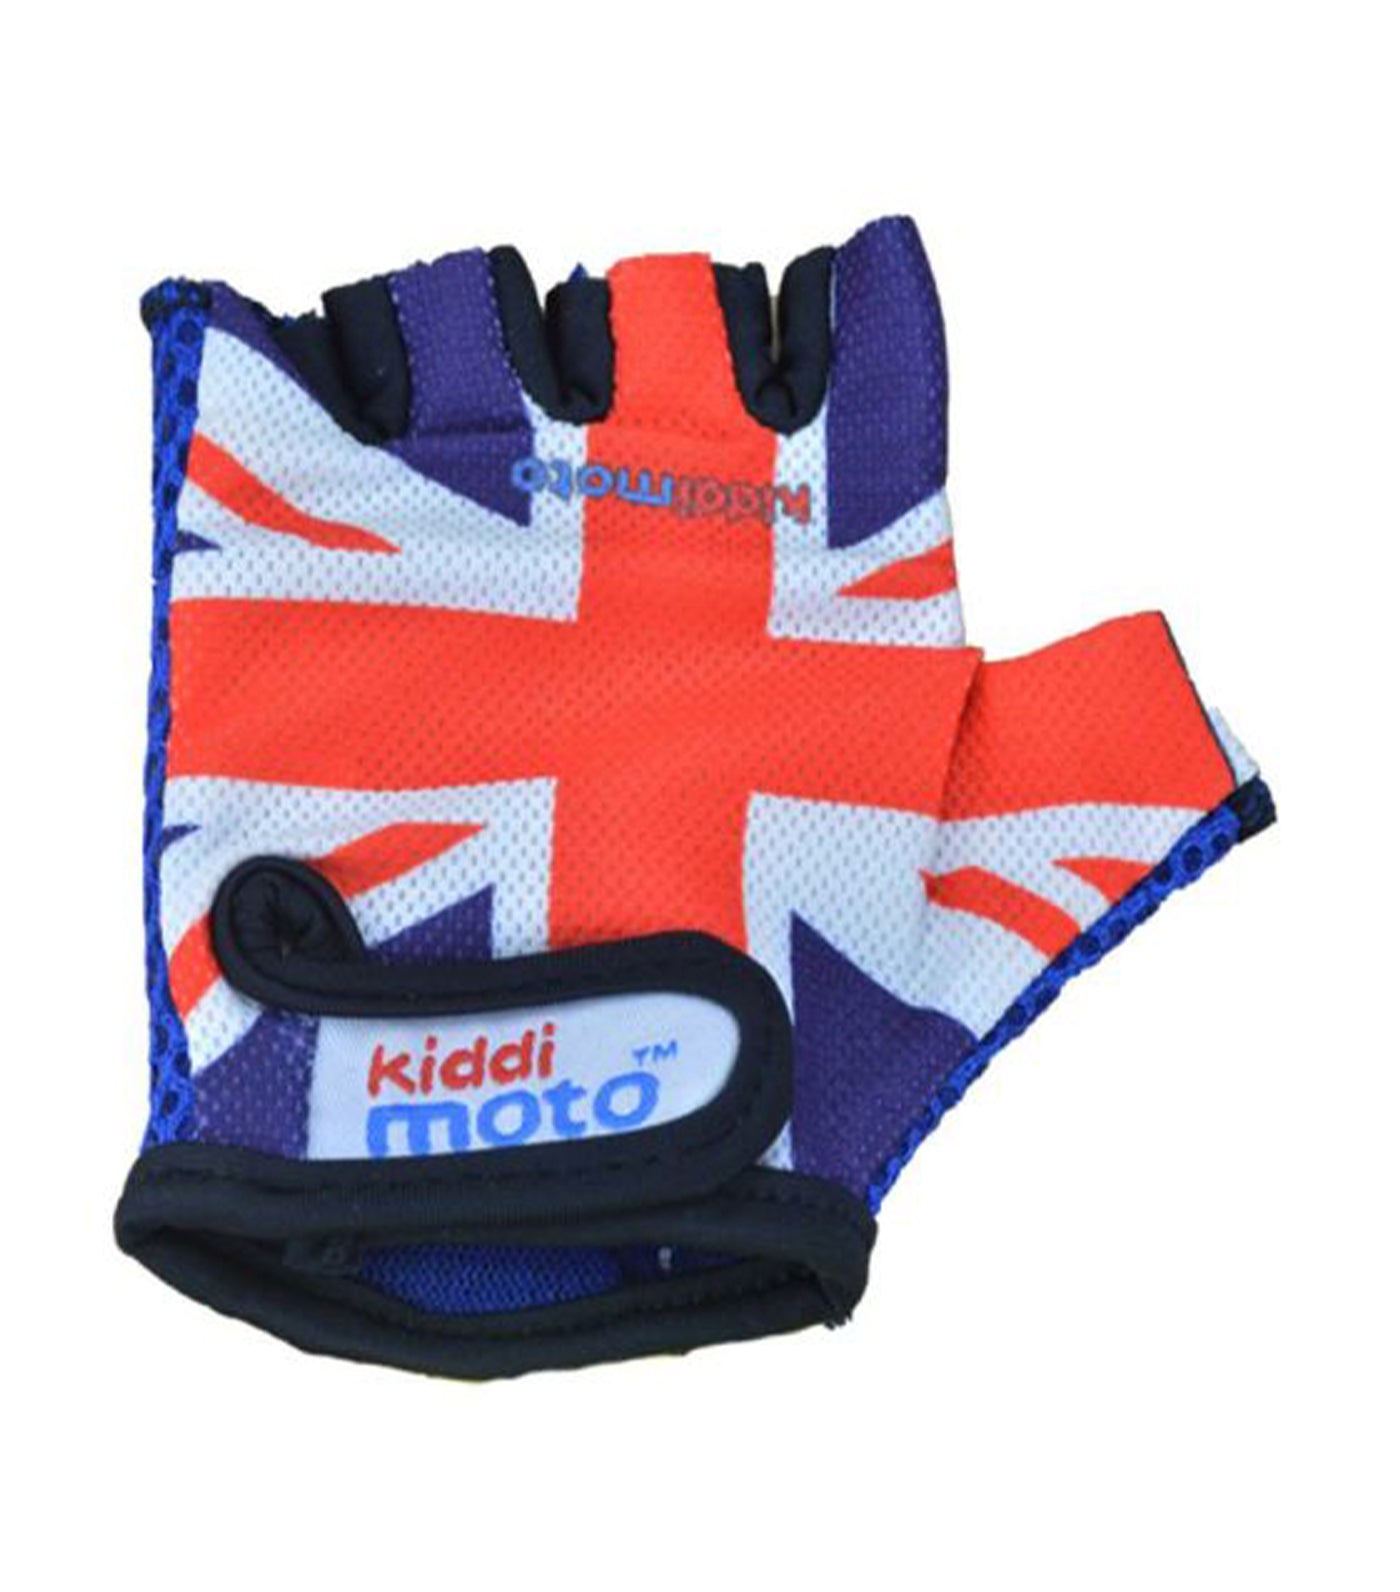 Kids Cycling Gloves - Union Jack